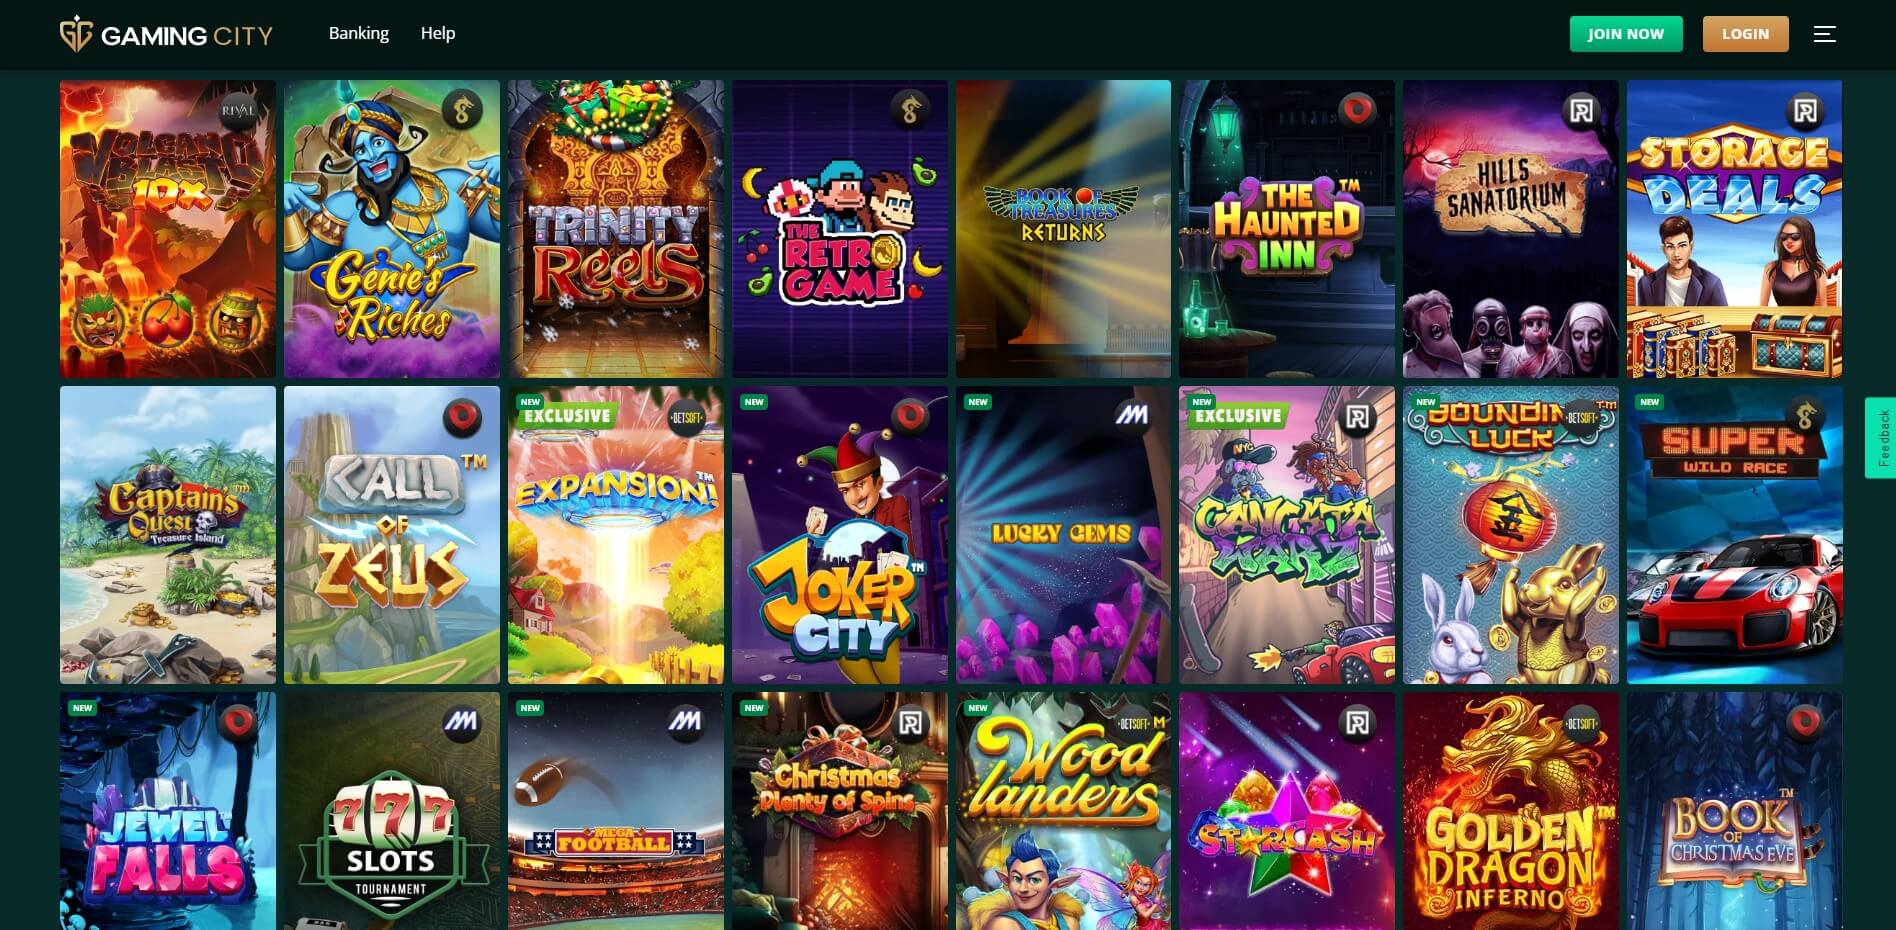 Gaming City Casino Games